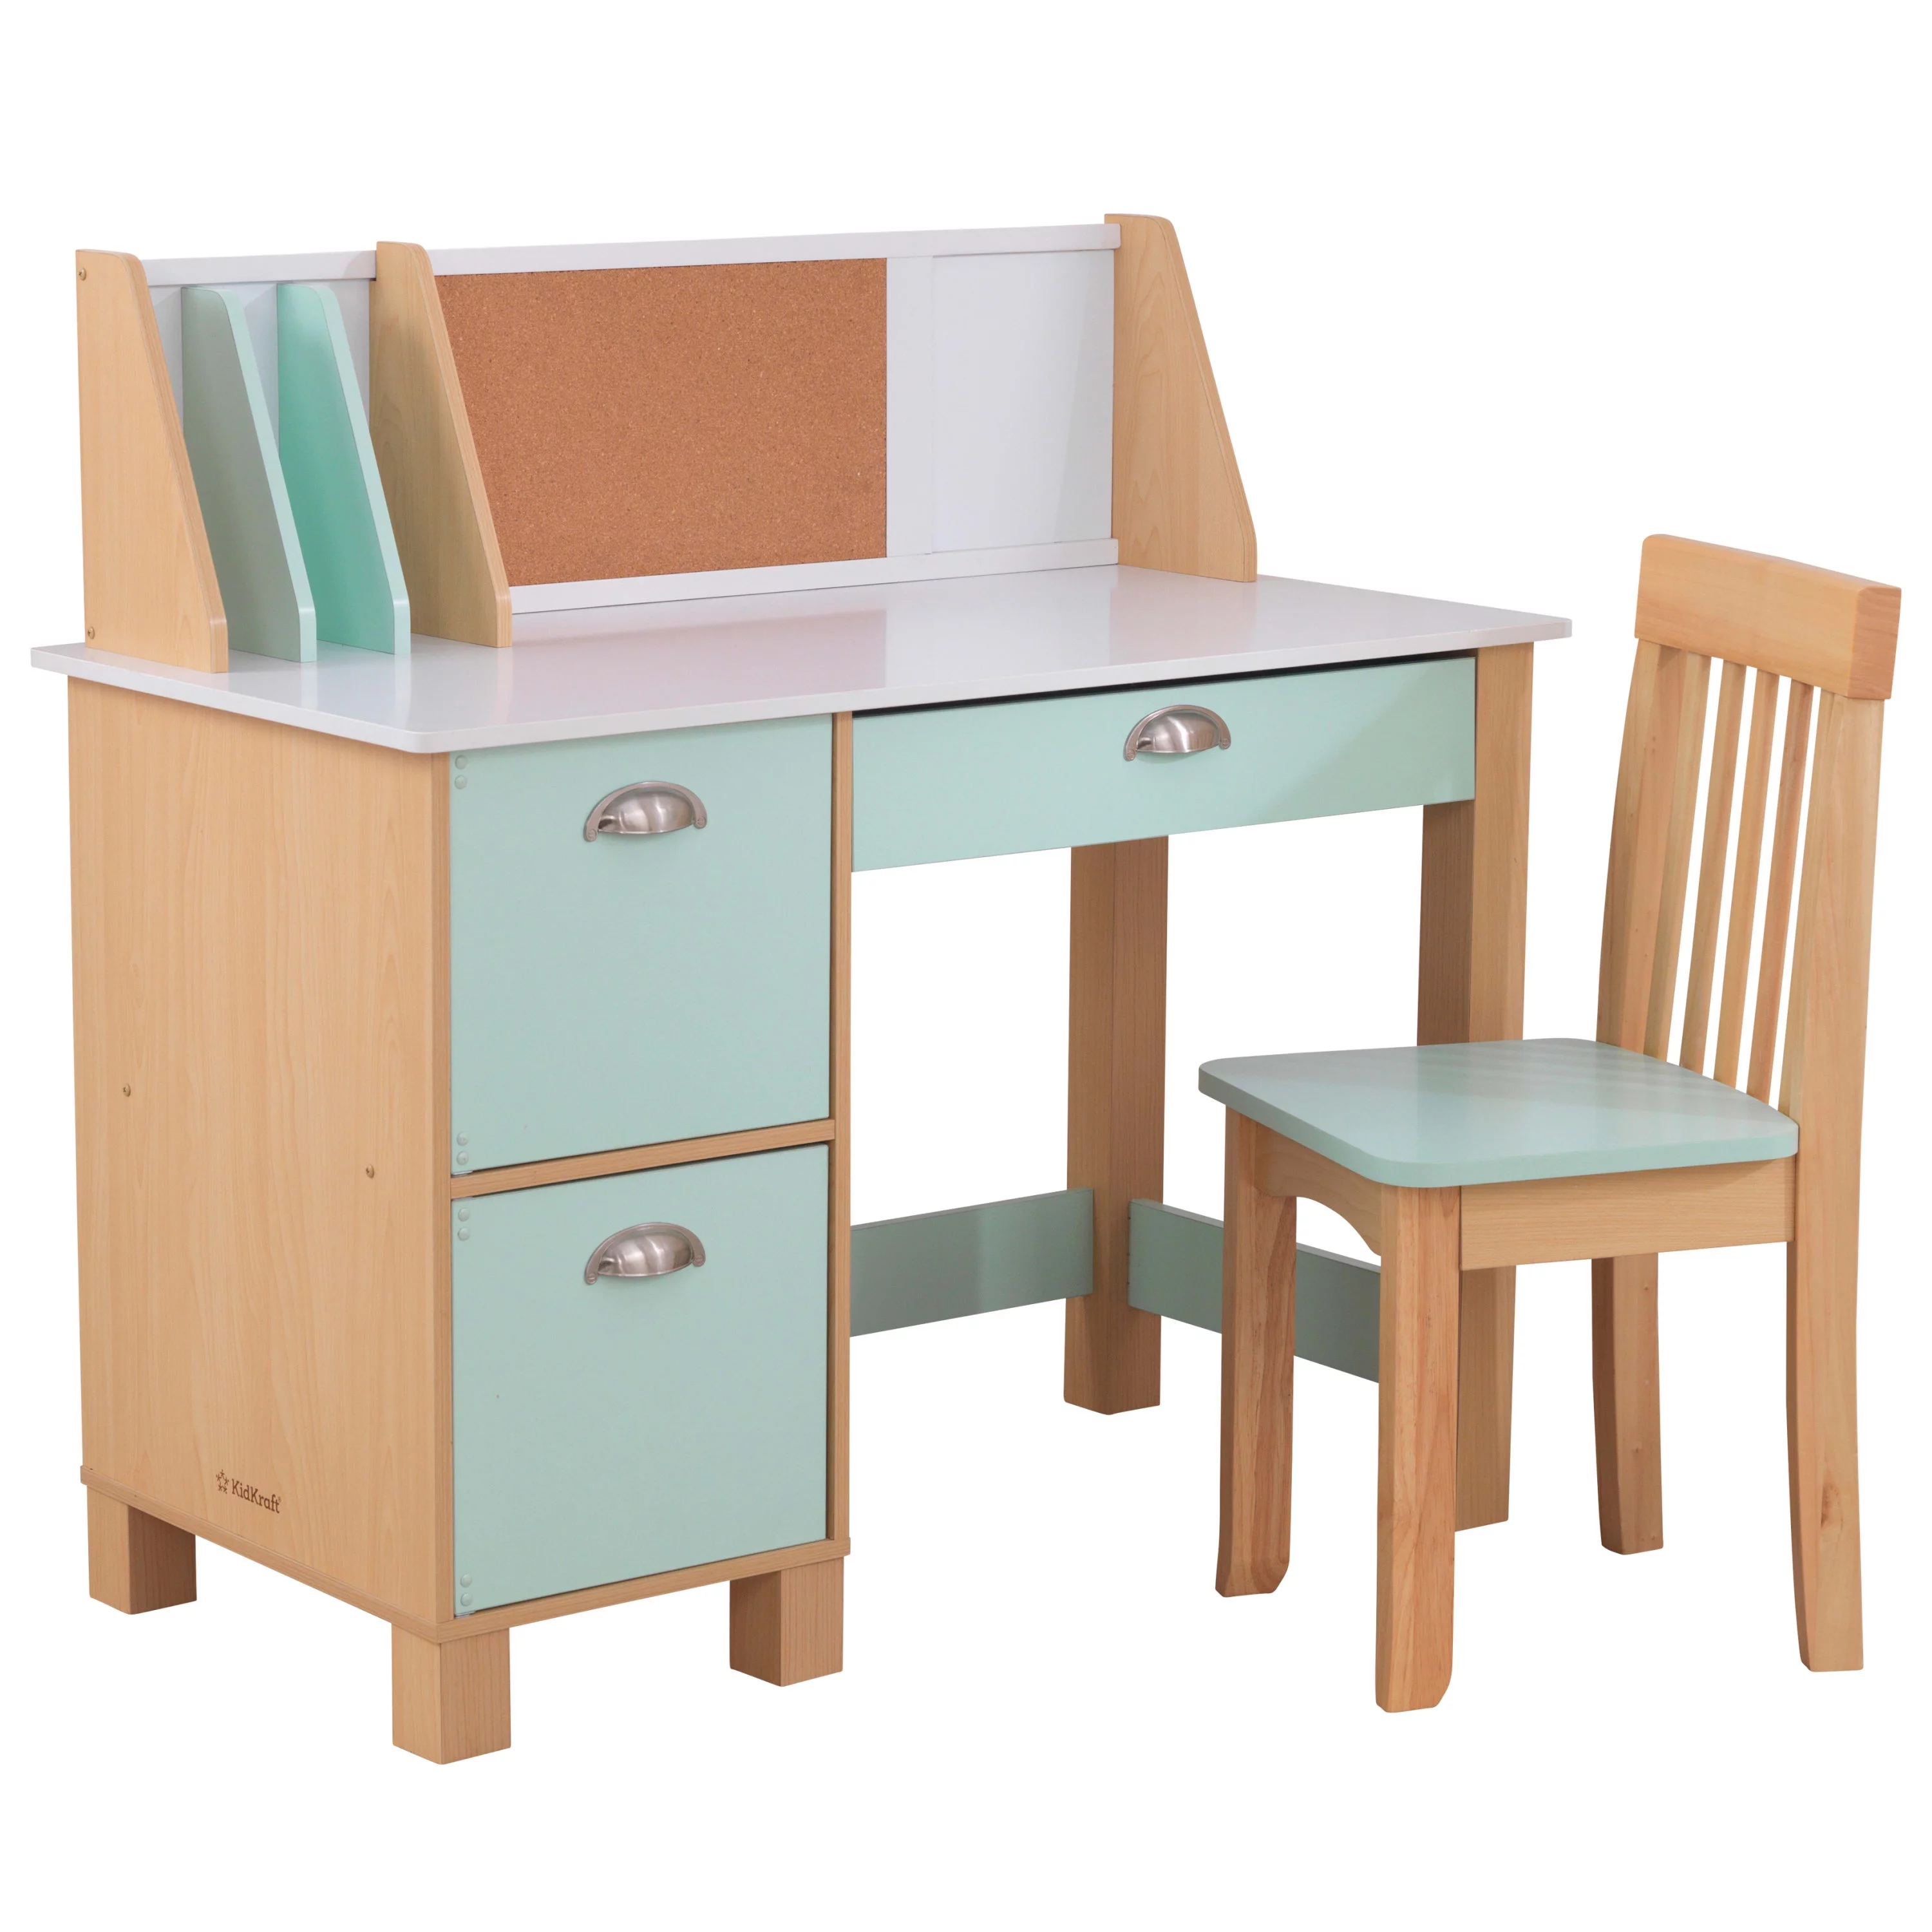 KidKraft Children's Study Desk with Chair, Mint Finish